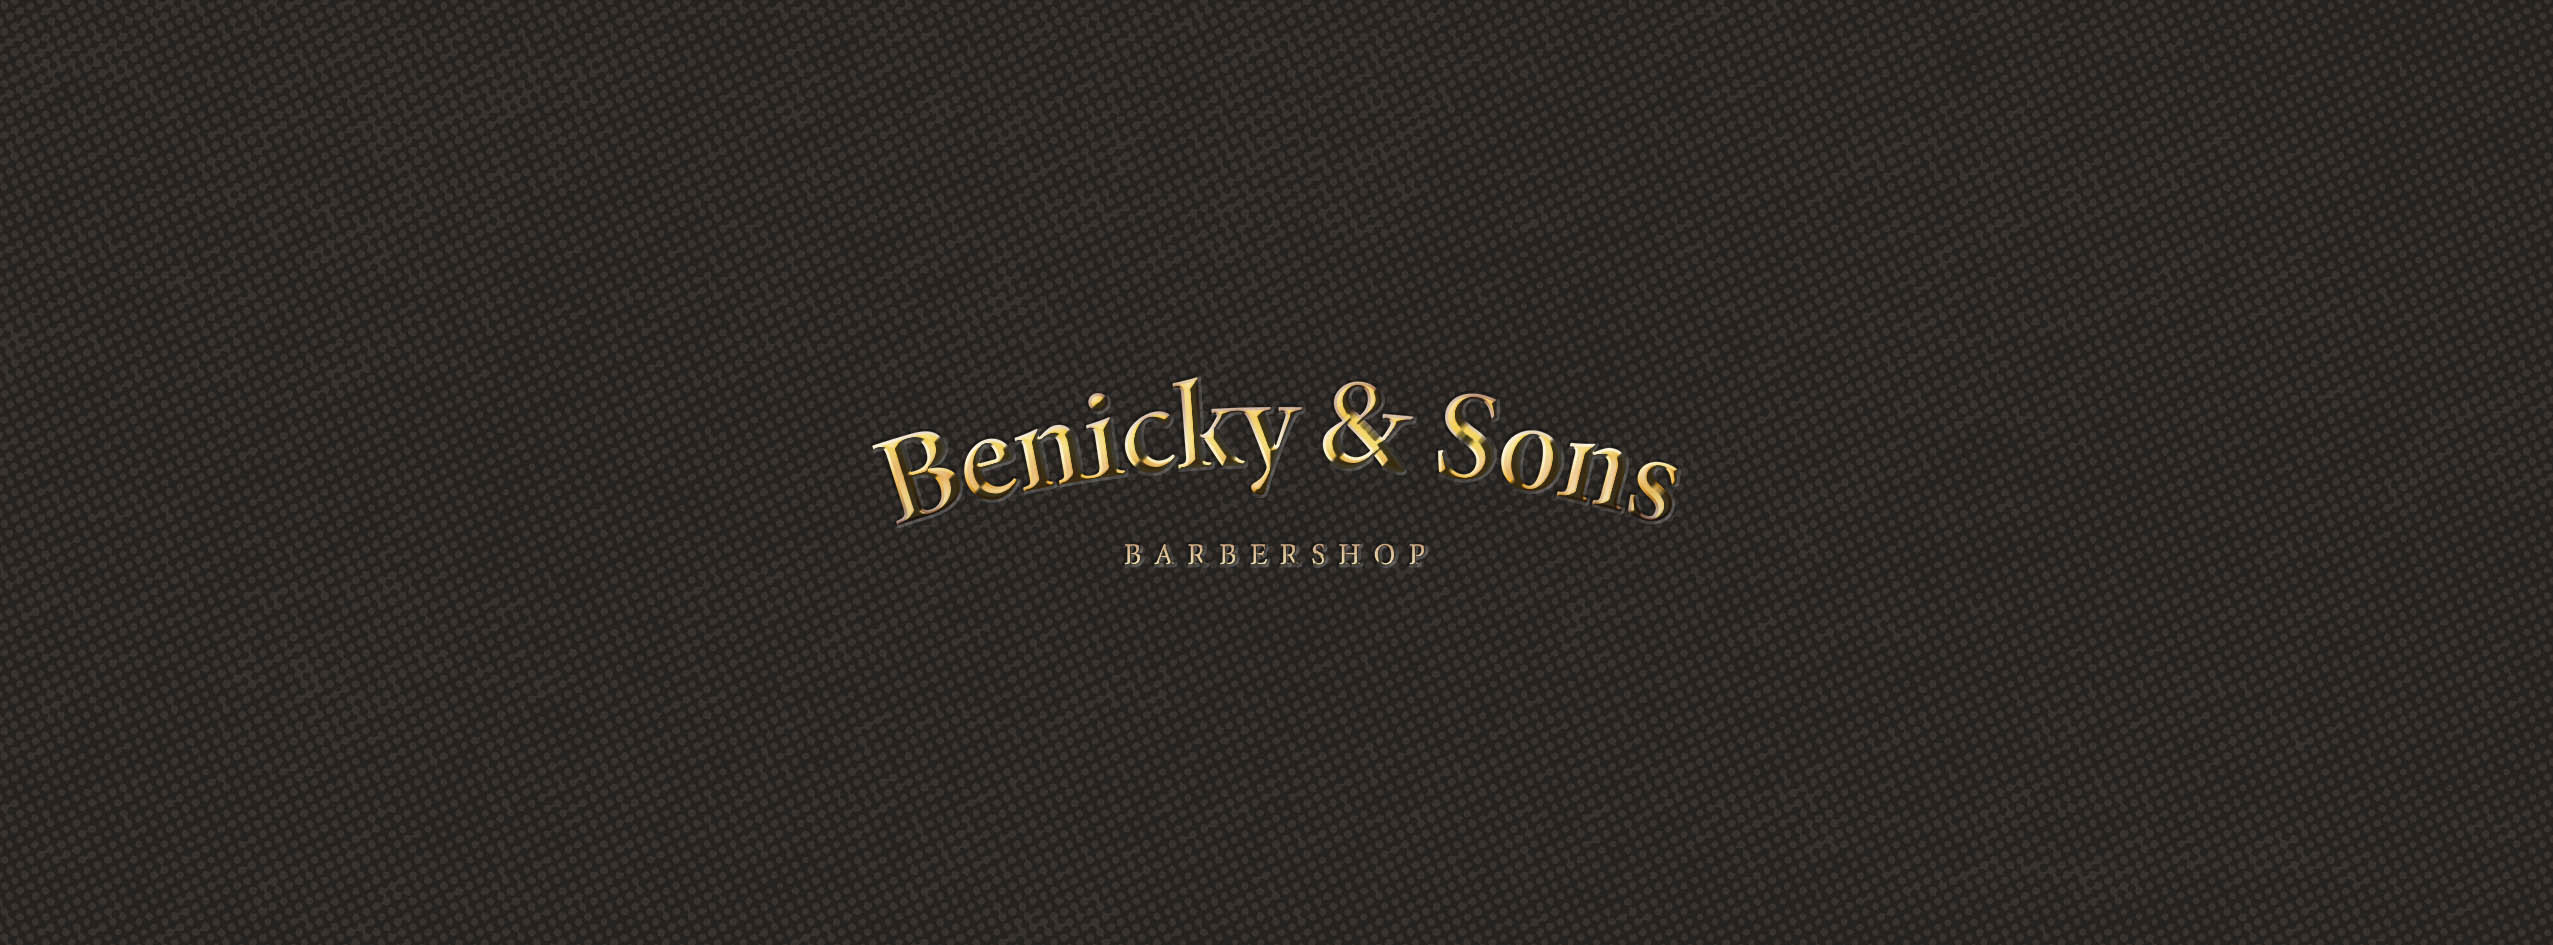 Benicky & Sons Barbershop